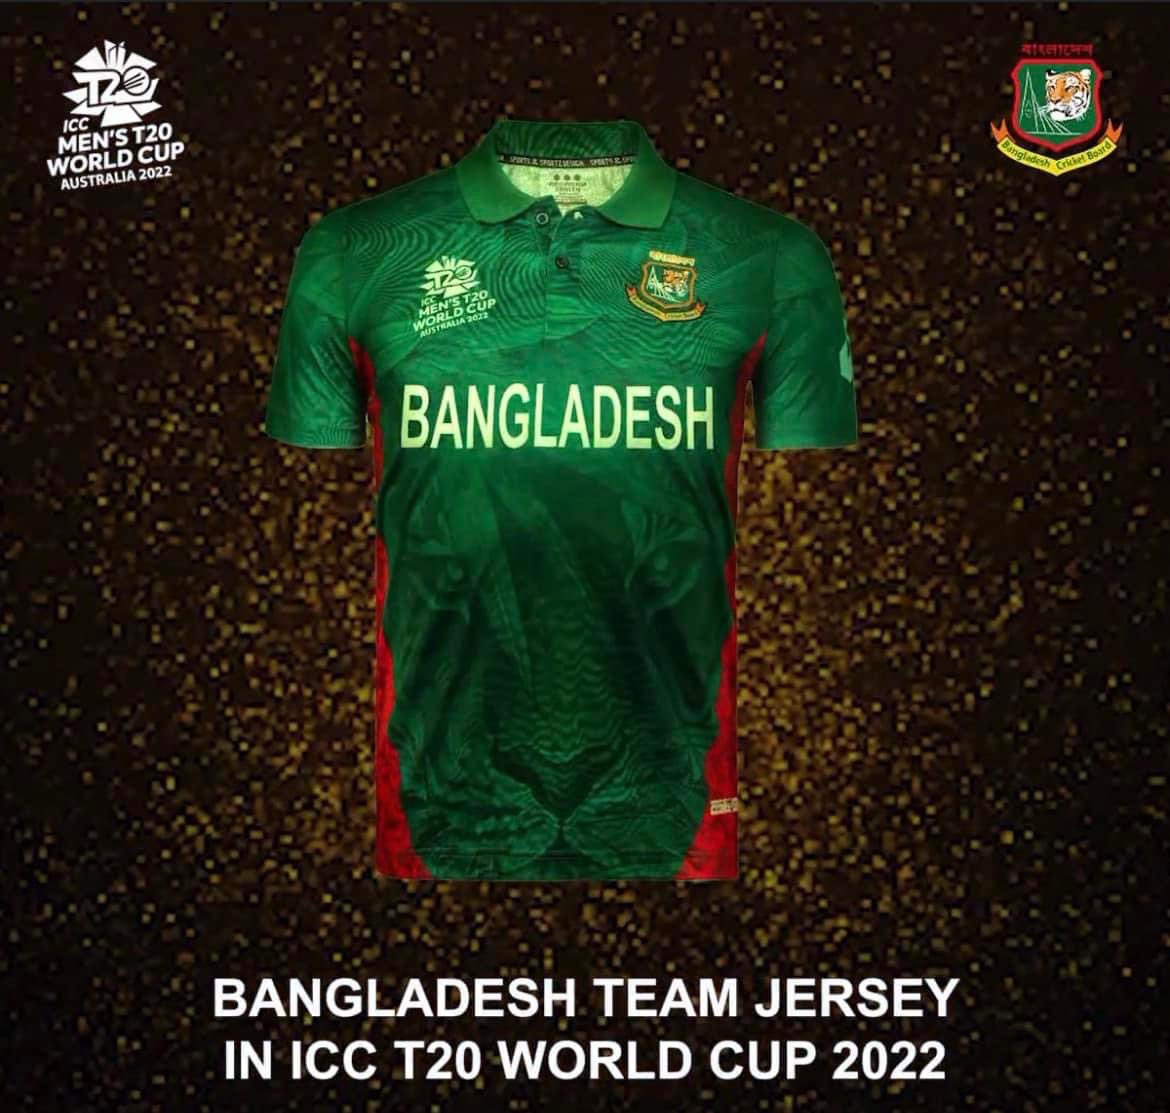 Oom of meneer briefpapier Naar de waarheid Saif Ahmed 🇧🇩 on Twitter: "OFFICIAL: Bangladesh's jersey for T20 World Cup.  ⭐️ https://t.co/Sx5YSDZq0n" / Twitter